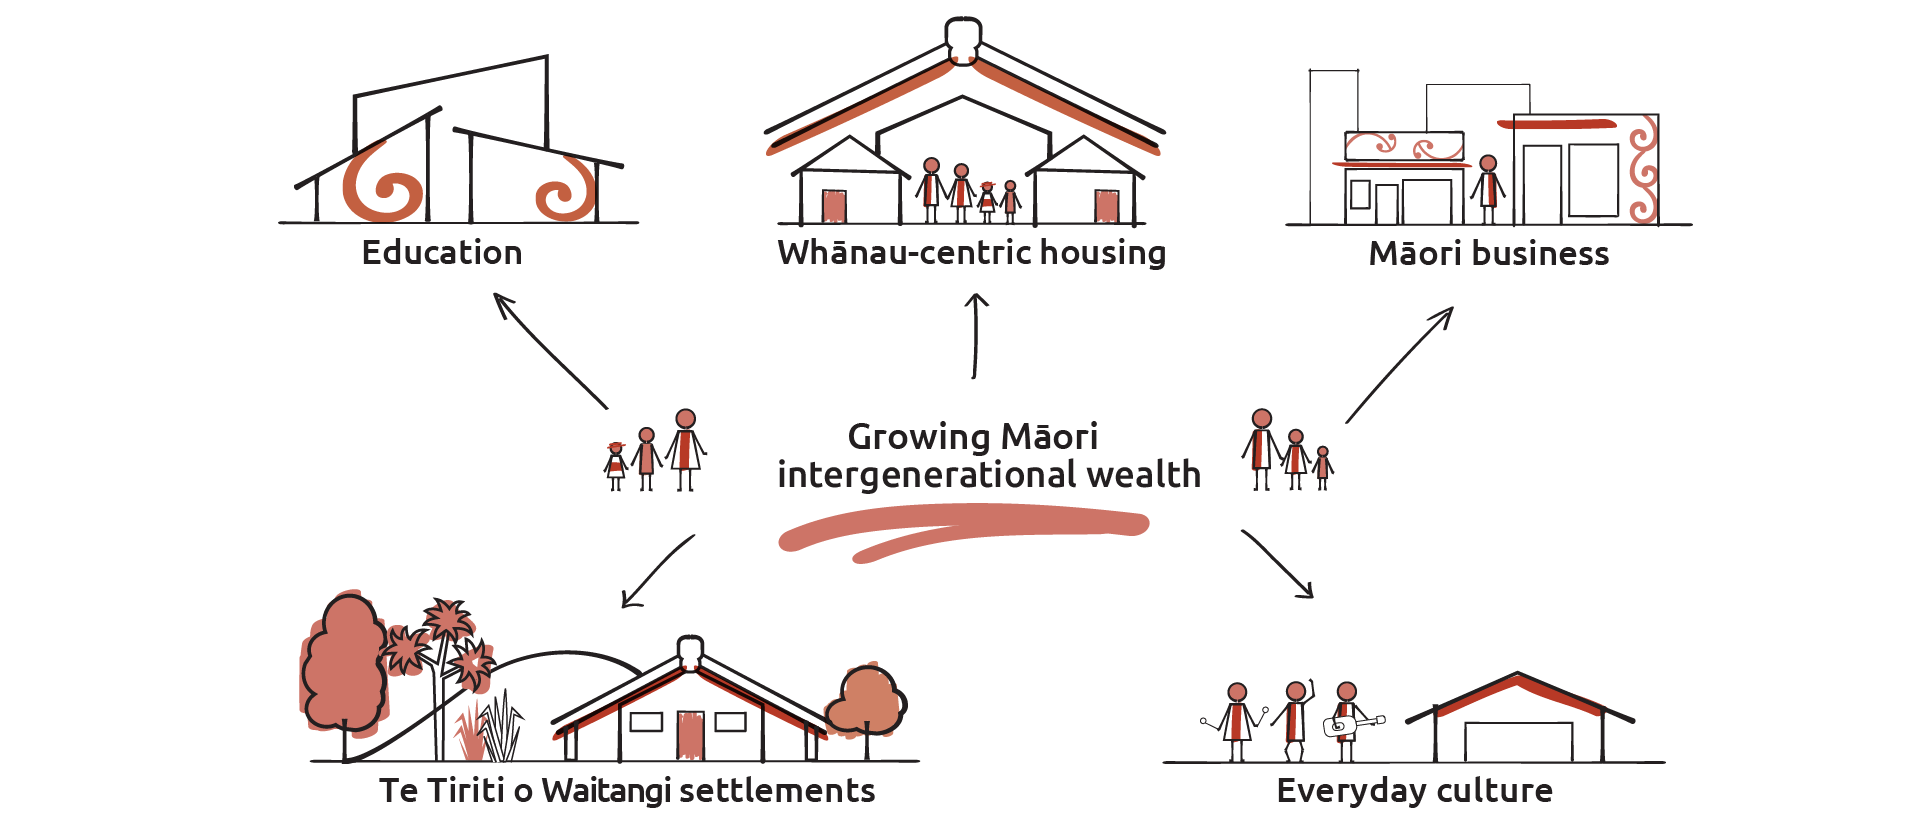 Māori intergenerational wealth can be built through education, whānau-centric housing, Māori business, Te Tiriti o Waitangi settlements and everyday culture.